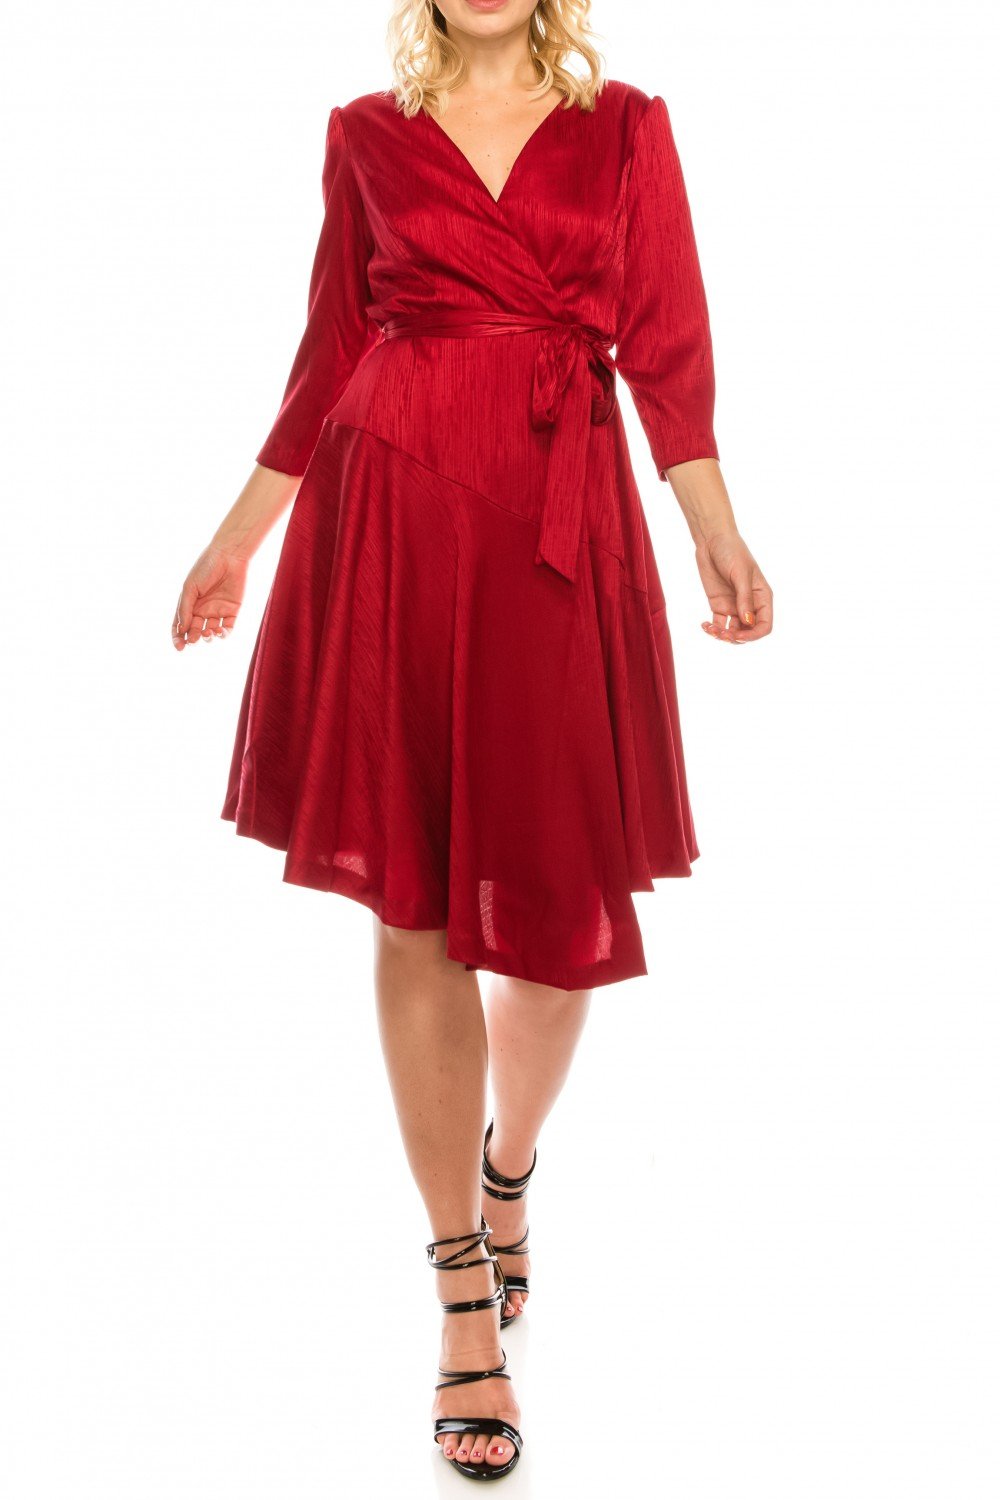 Gabby Skye - 18514M Three Quarter Sleeve Twill Faux Wrap Dress In Red